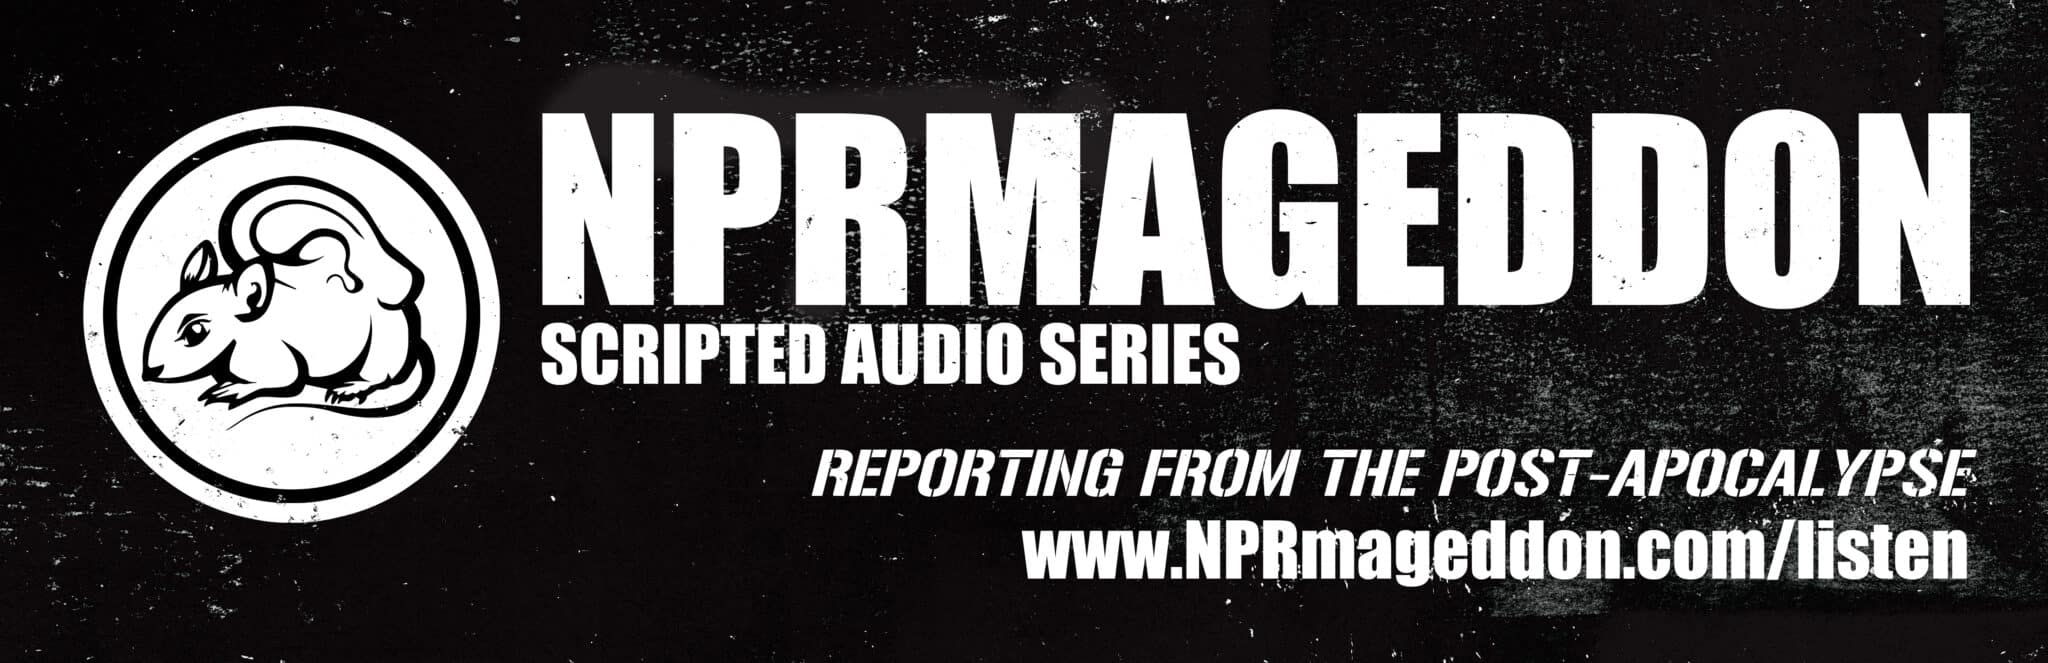 The NPRmageddon logo and podcast header